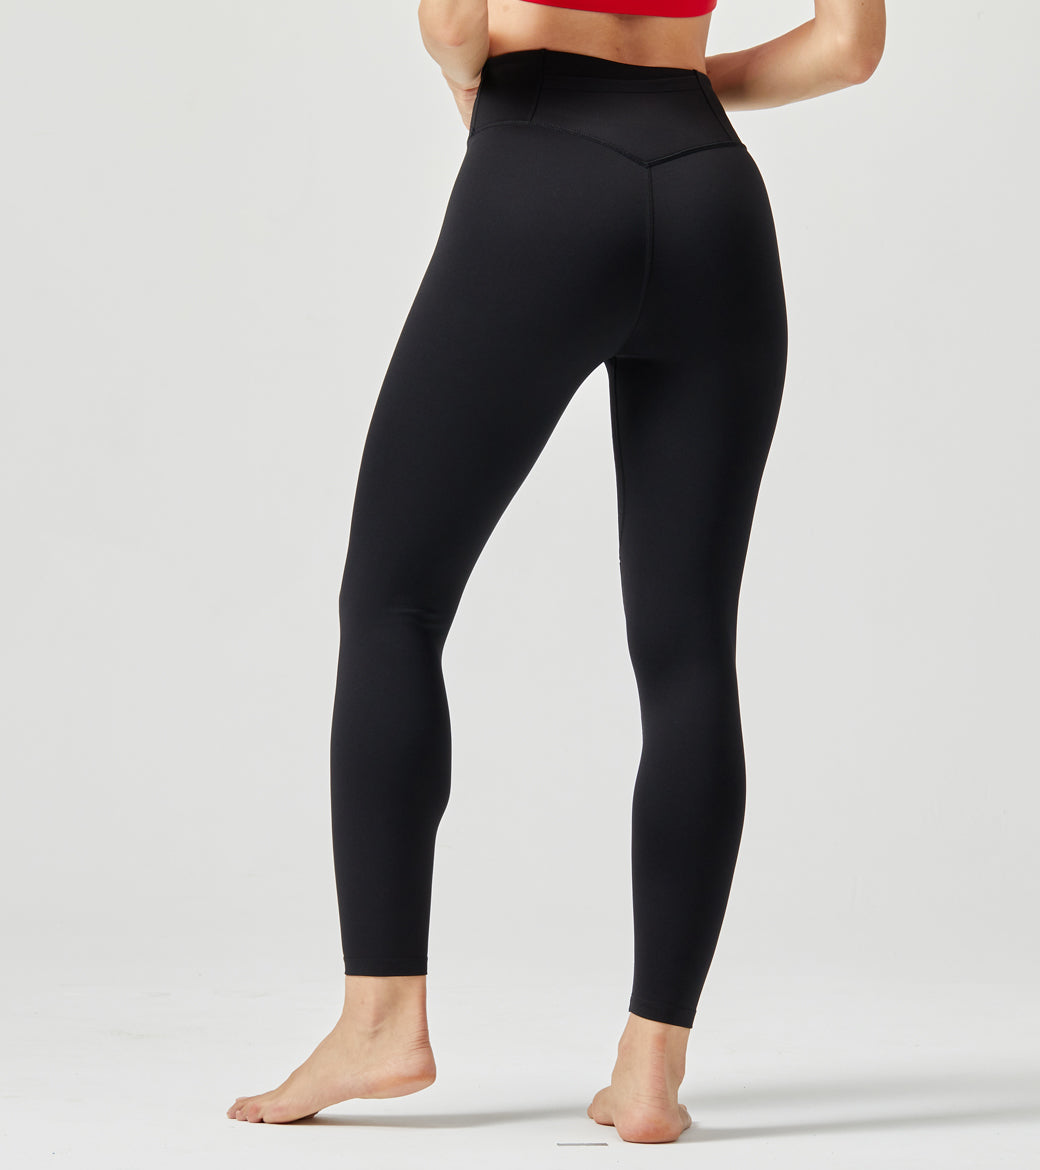 LOVESOFT Women's Black Easy Warm Yarm Leggings High Waist Hips Running Yoga Pants